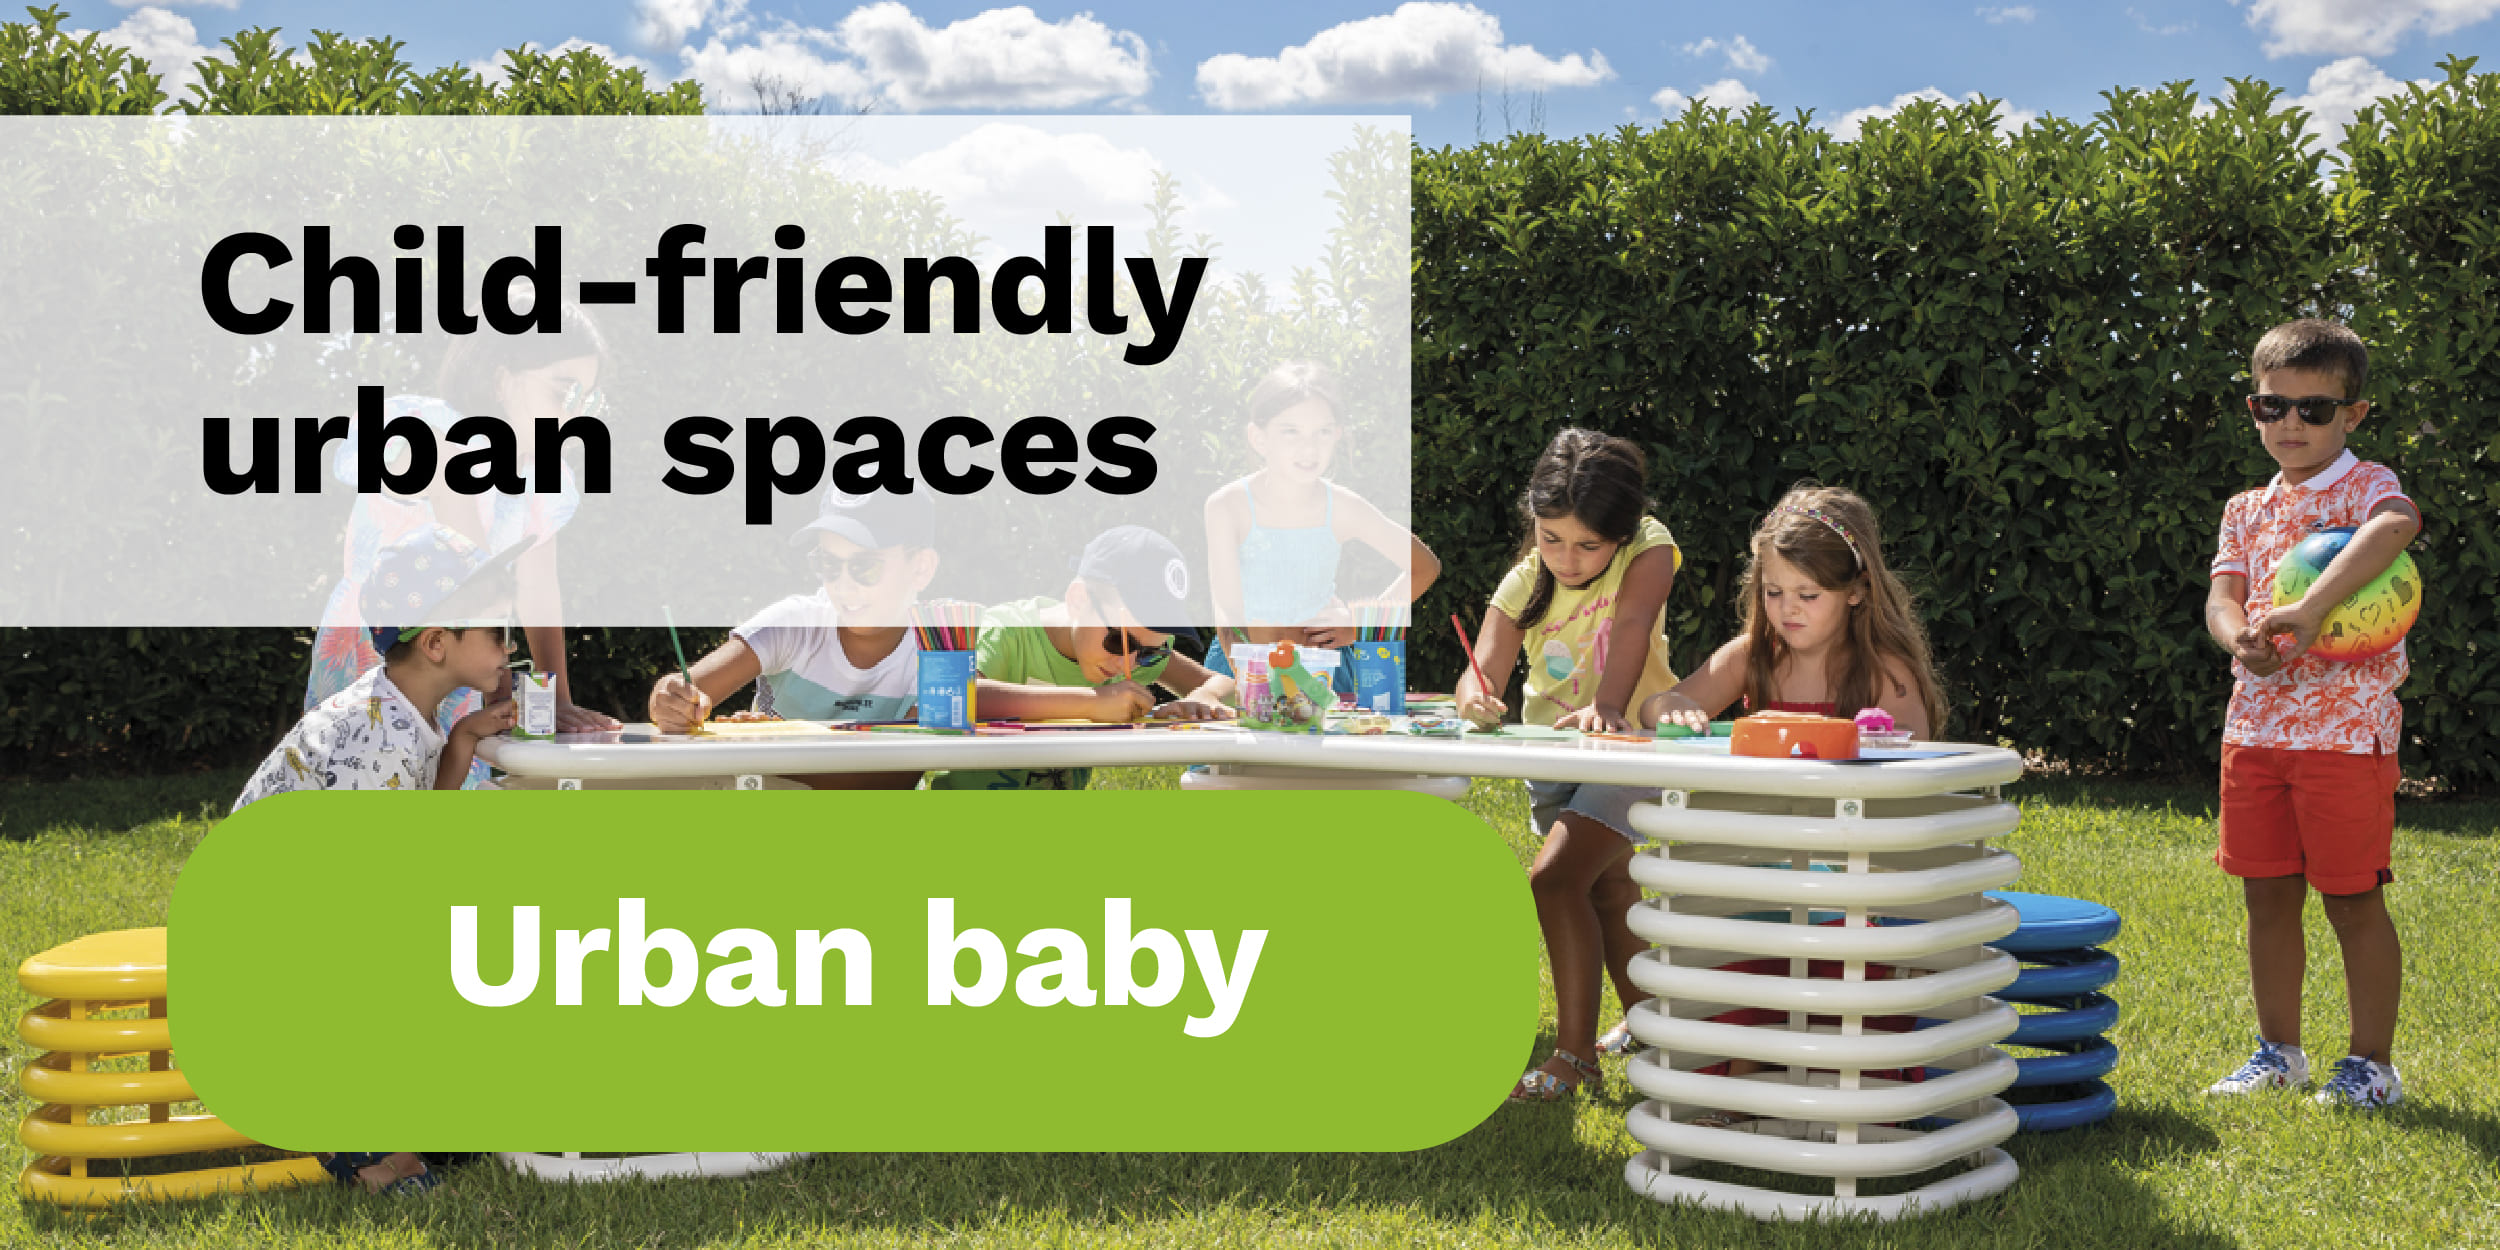 urban spaces suitable for children